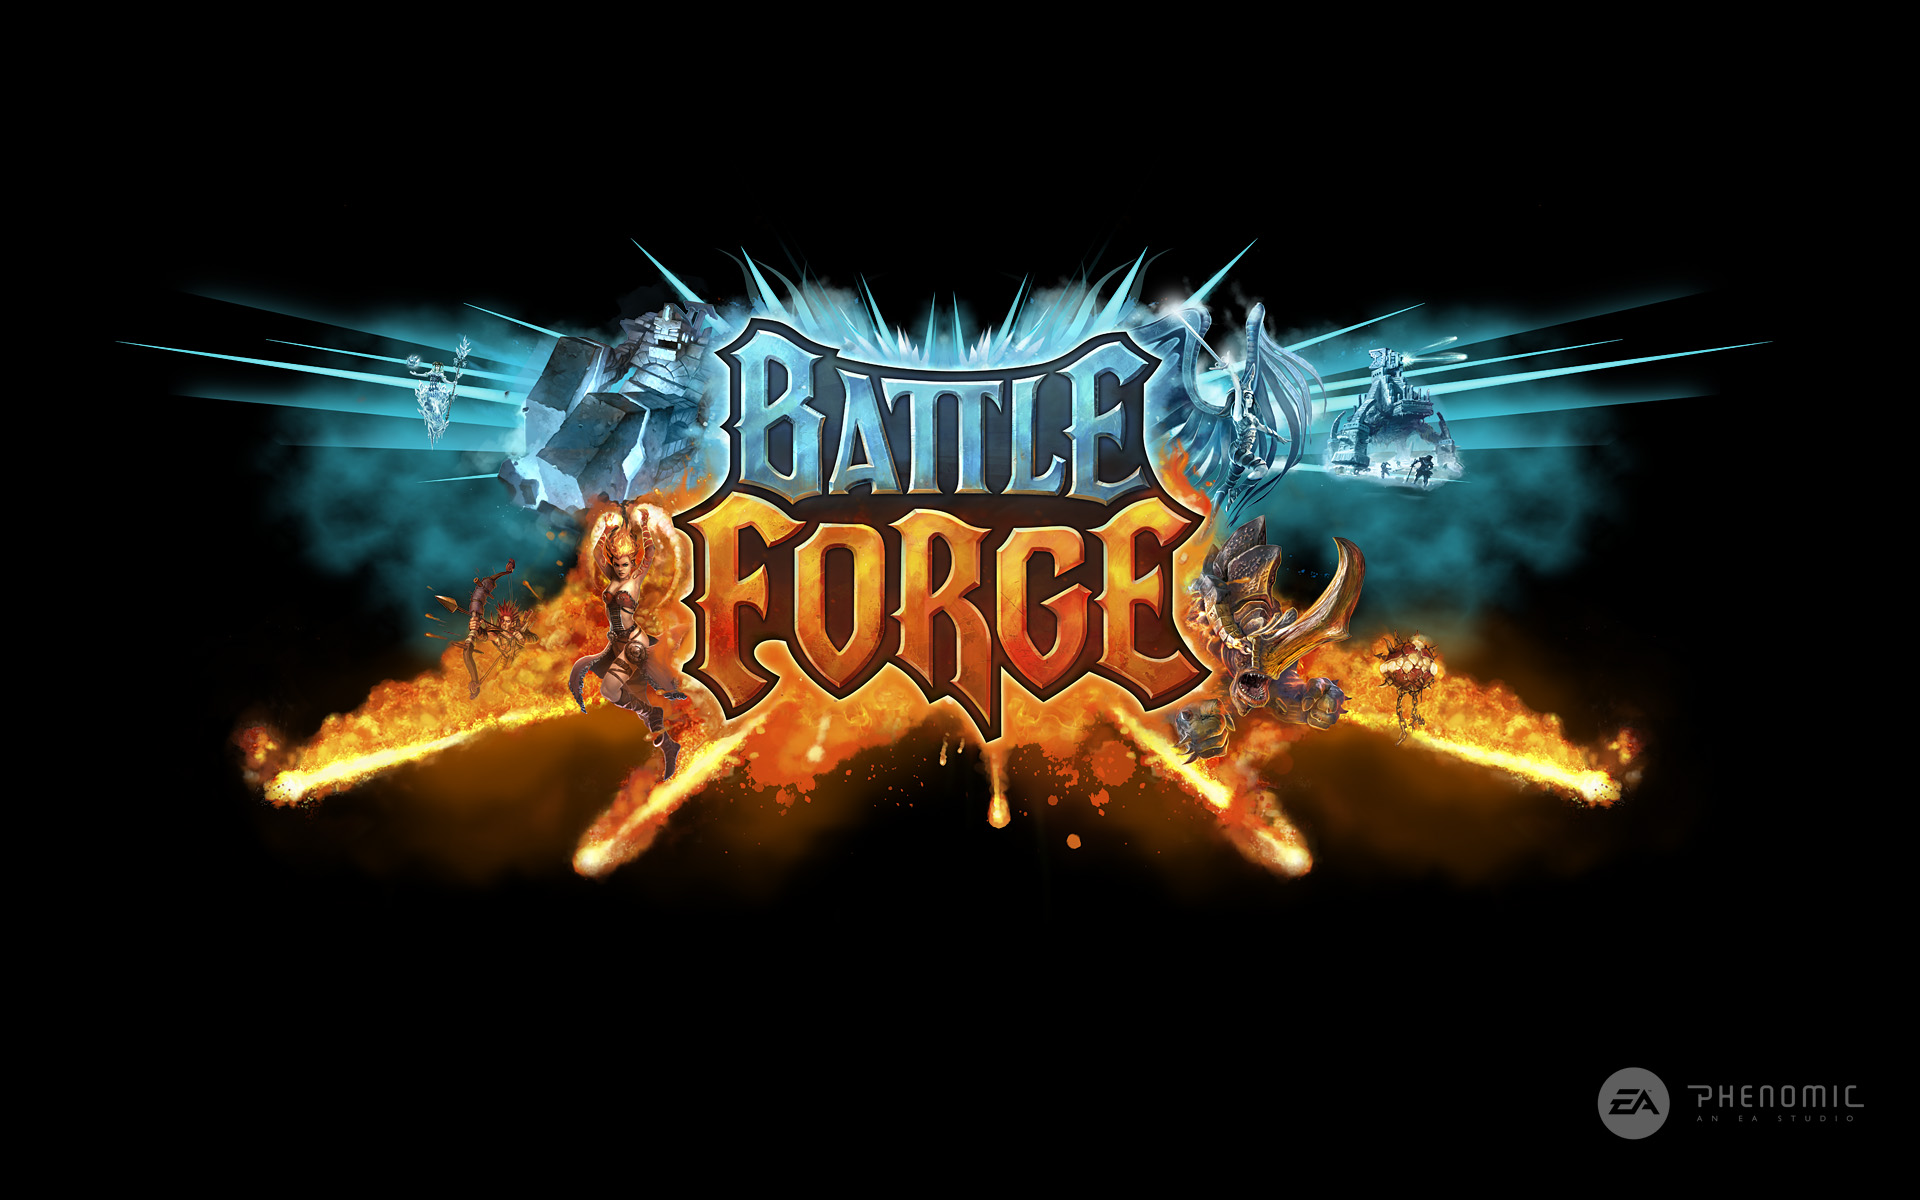 Battle_Forge_01_1920x1200.jpg